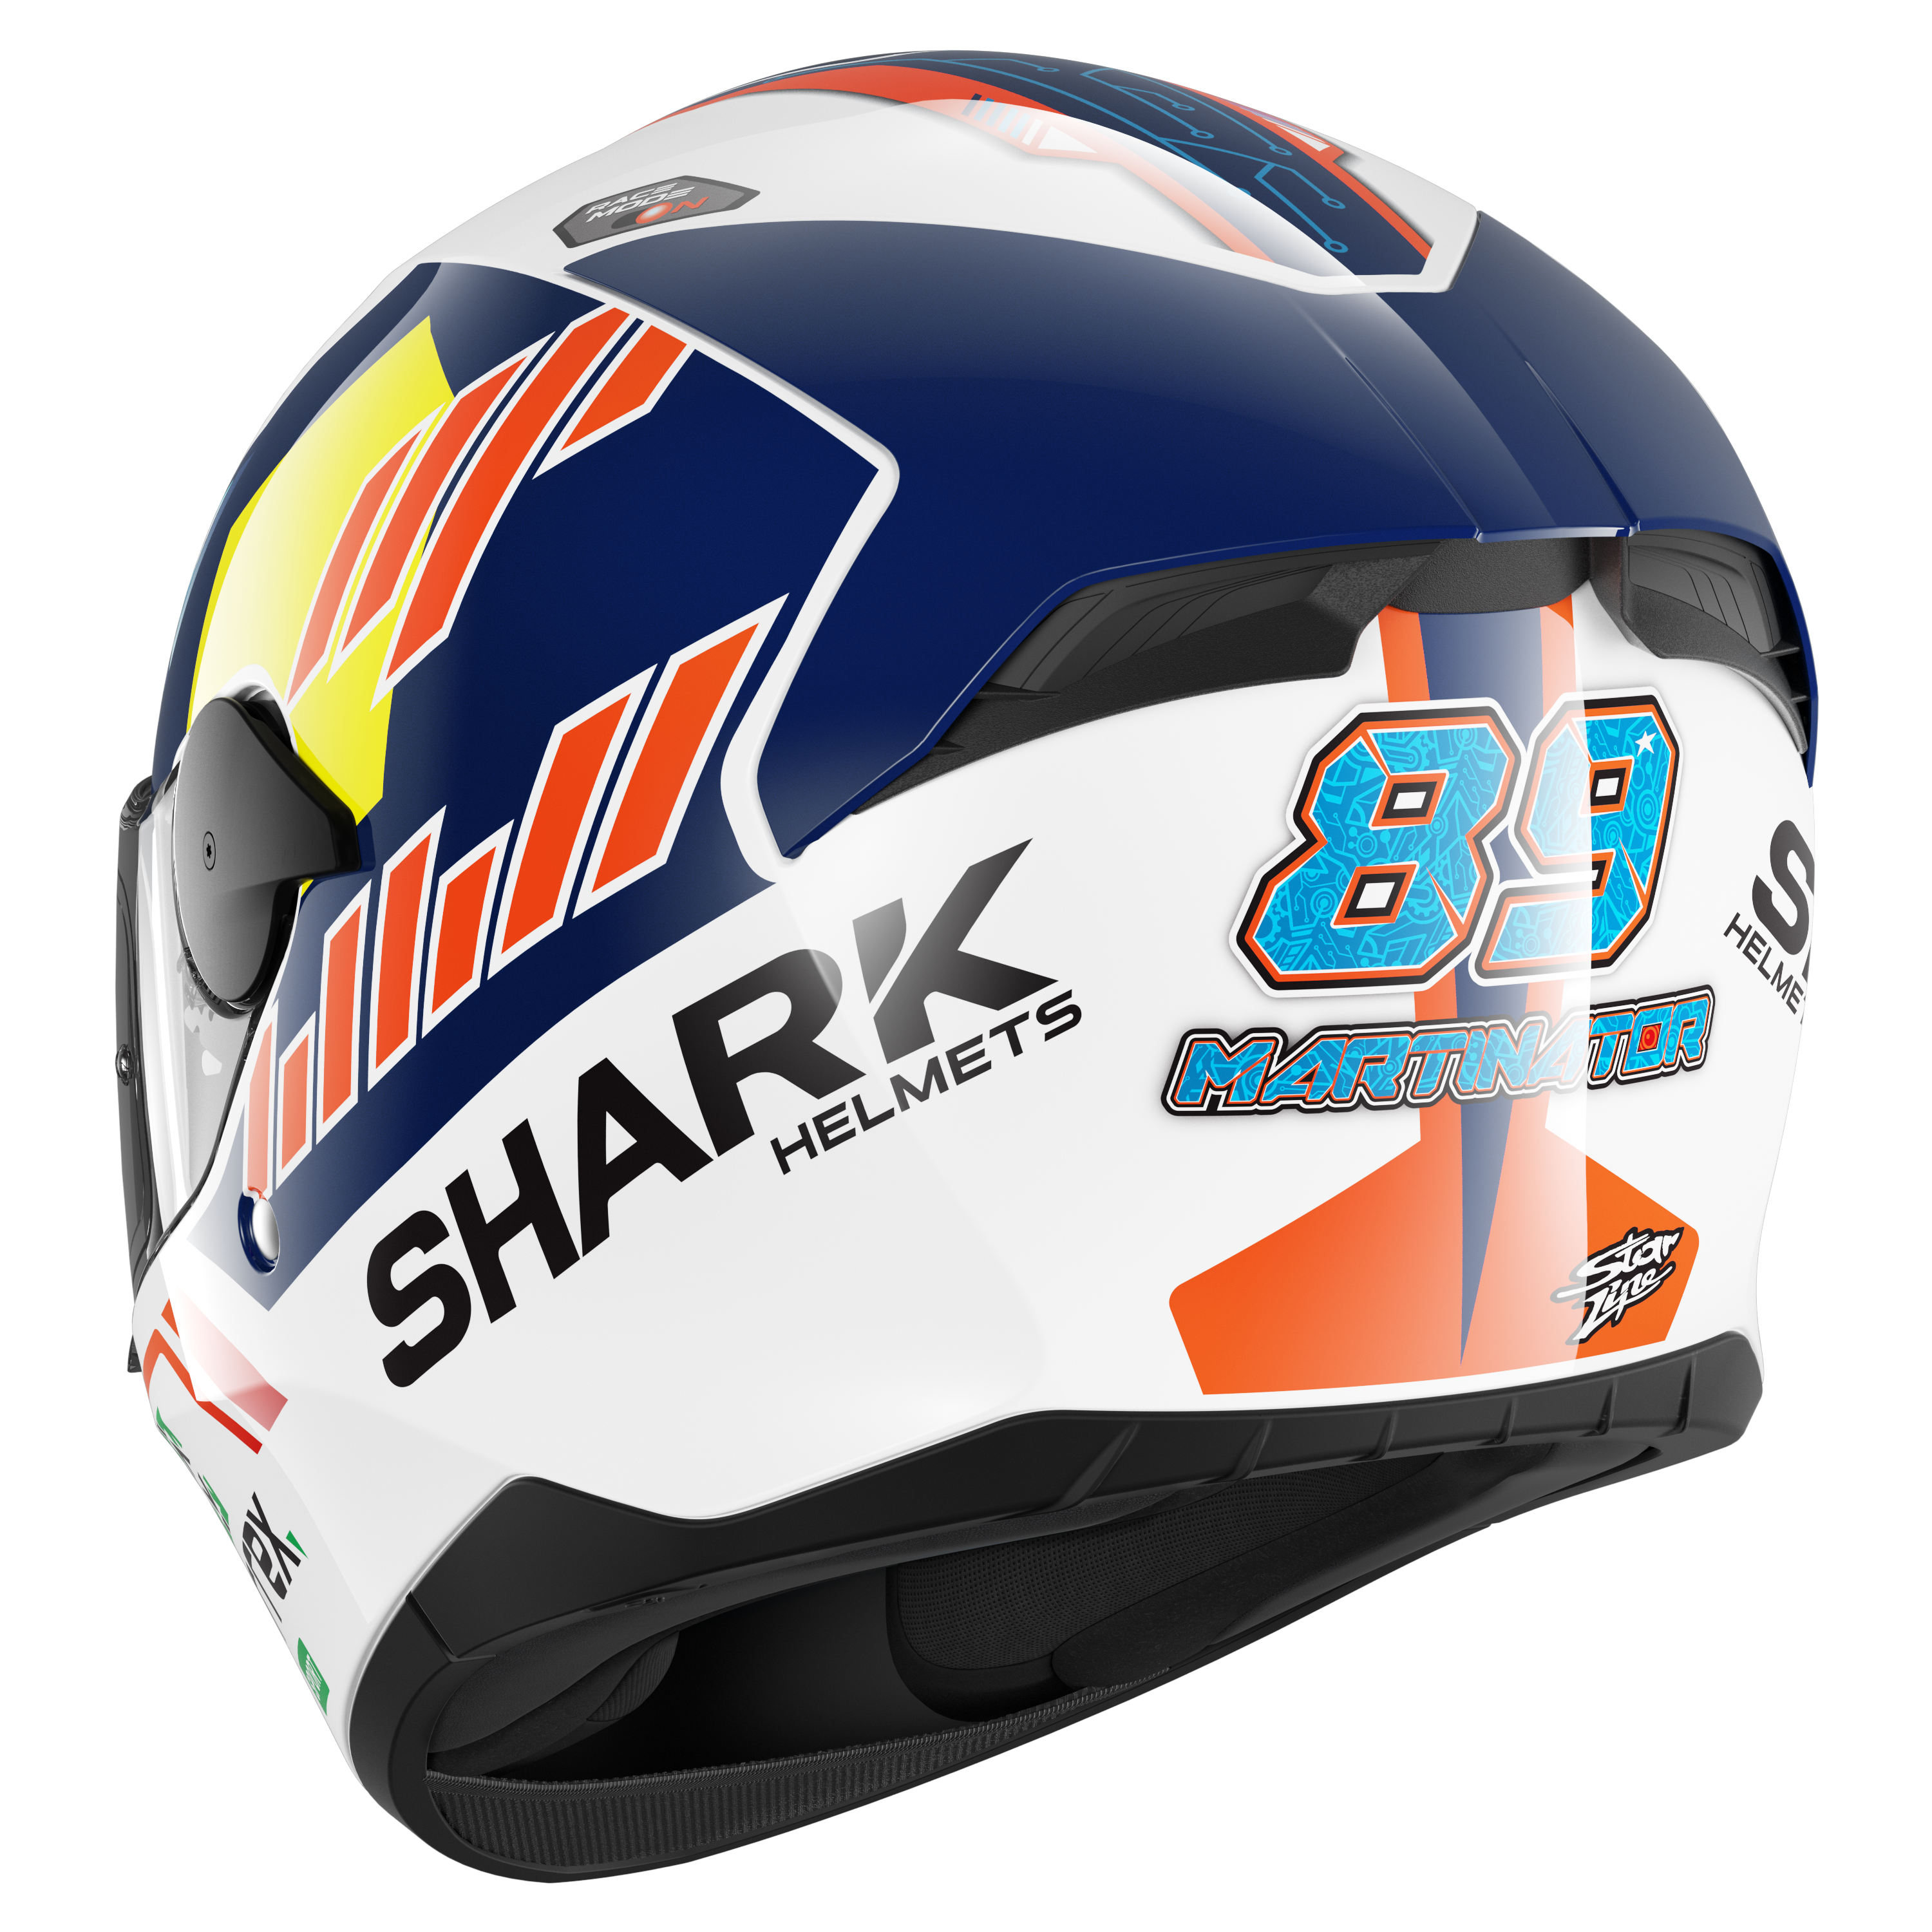 Shark D-Skwal 2 Penxa Helmet Black/Red/Anth